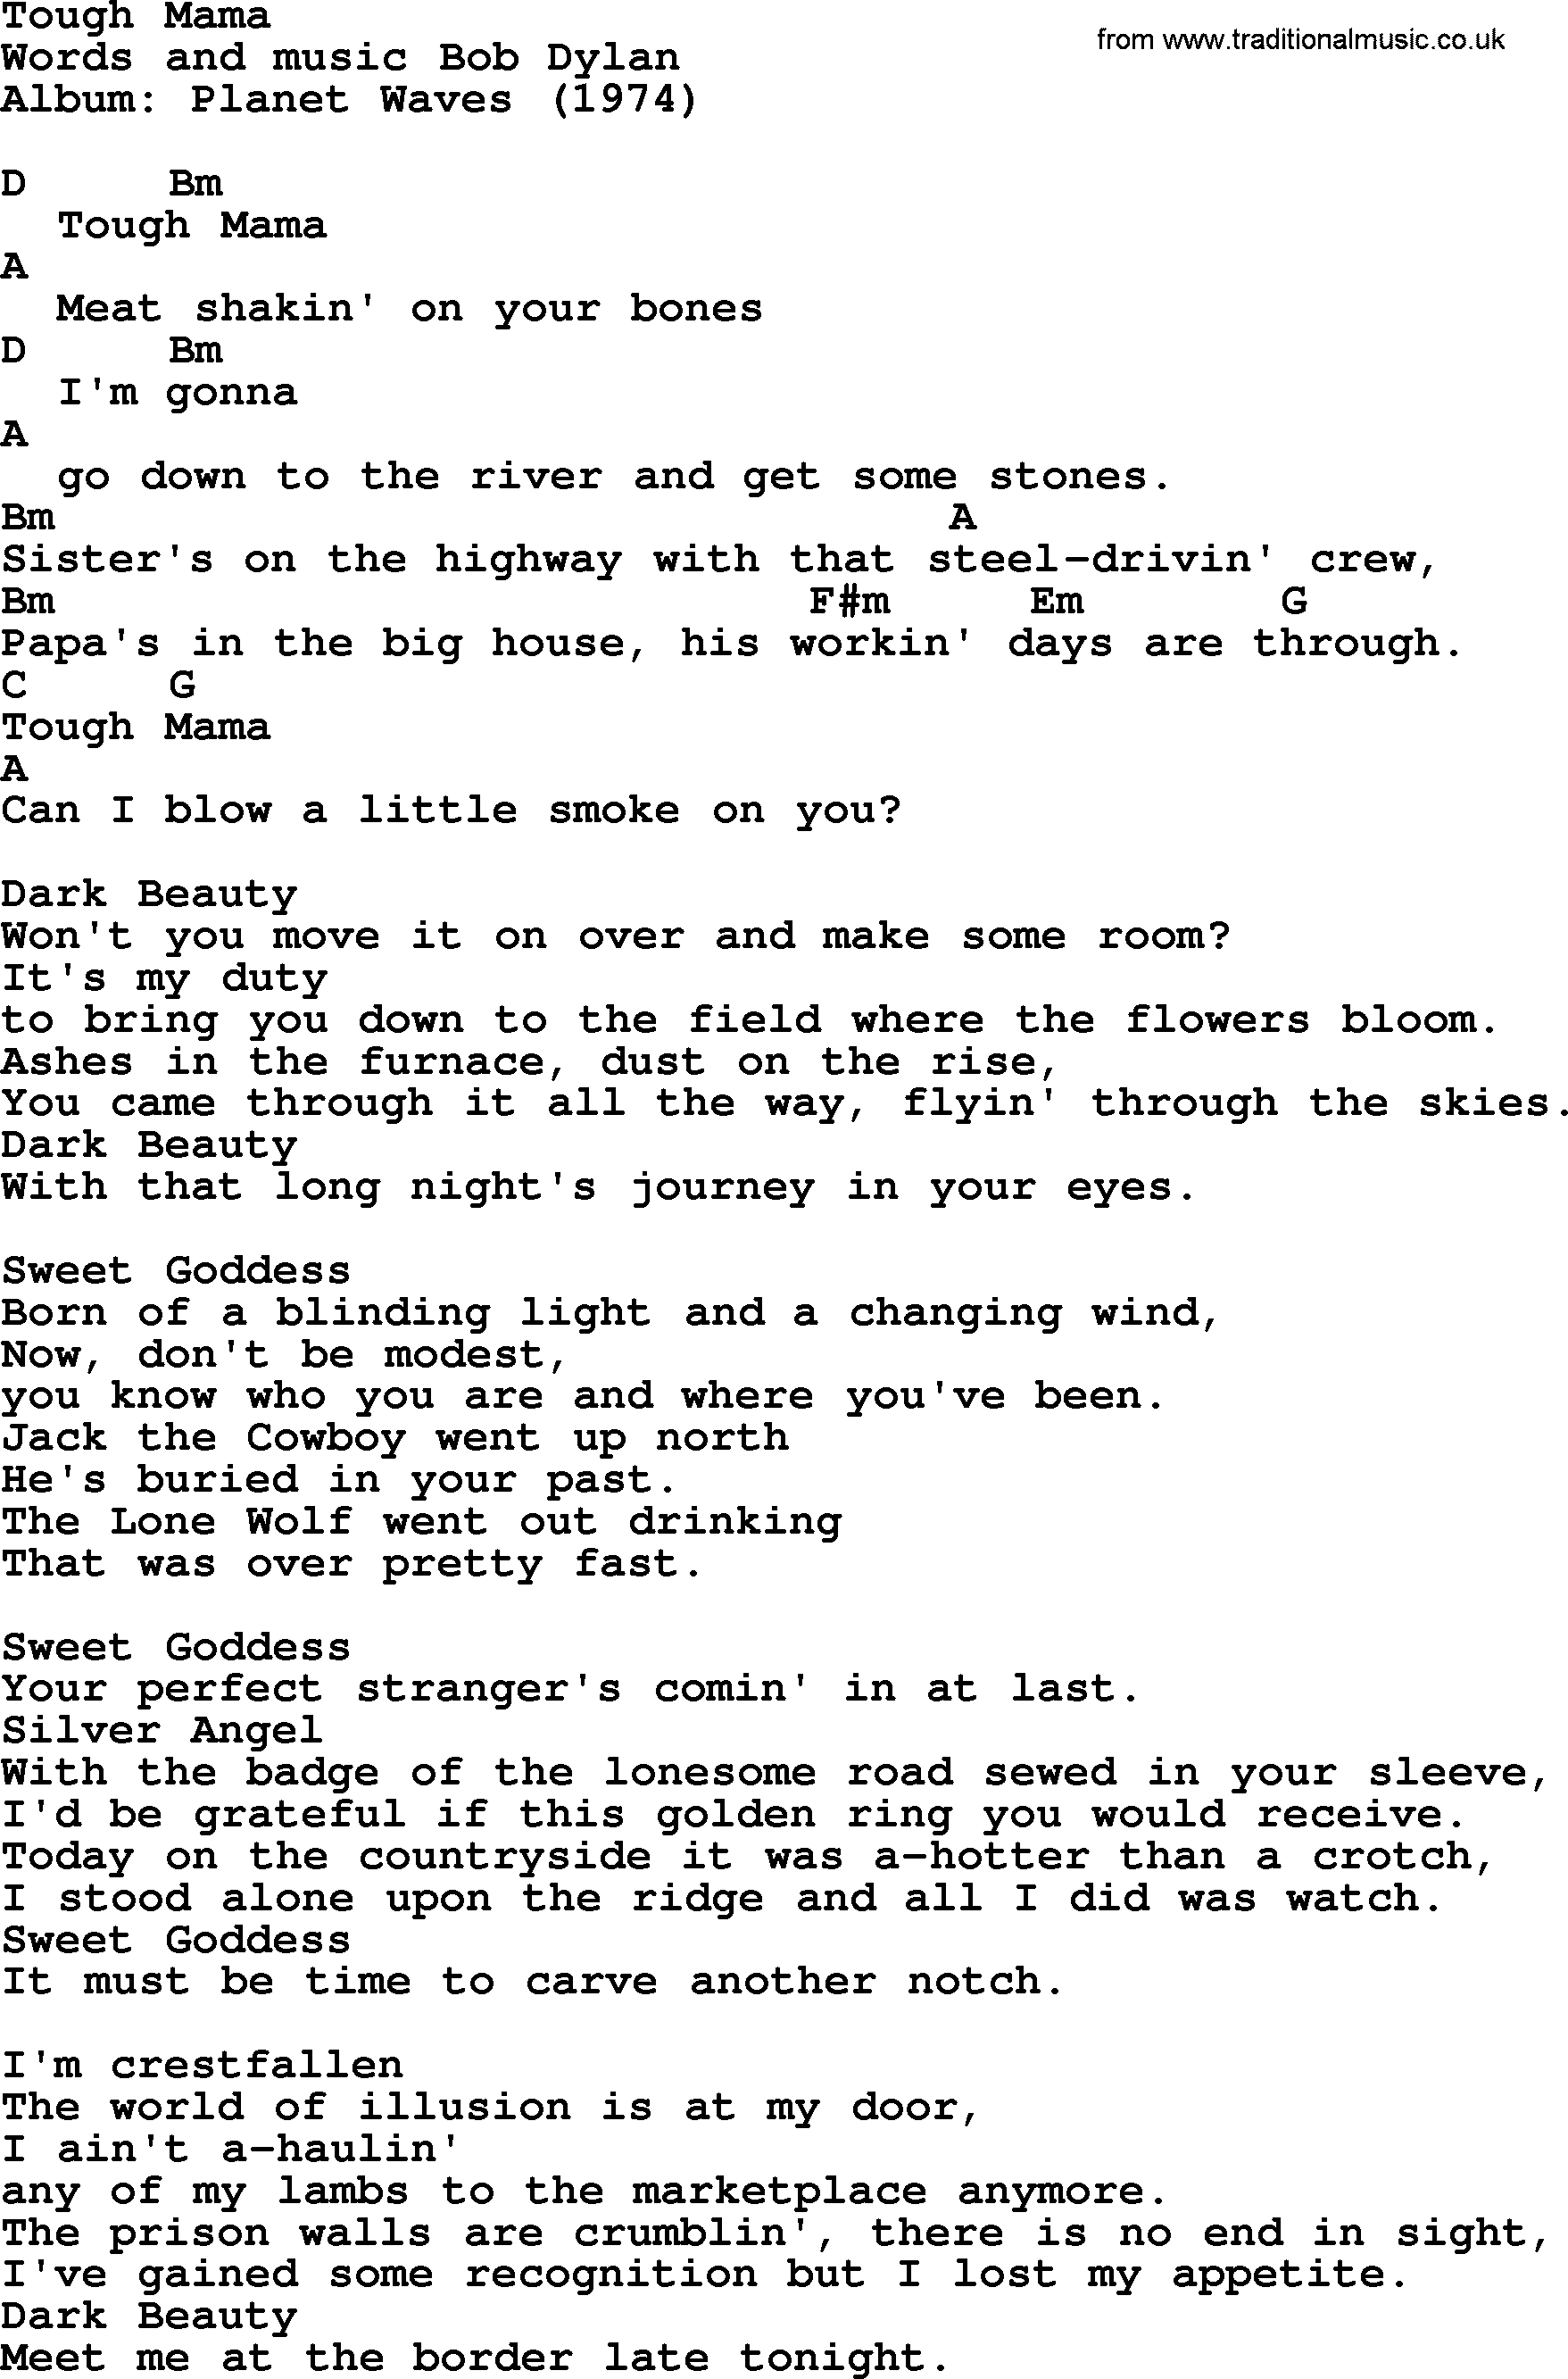 Bob Dylan song, lyrics with chords - Tough Mama